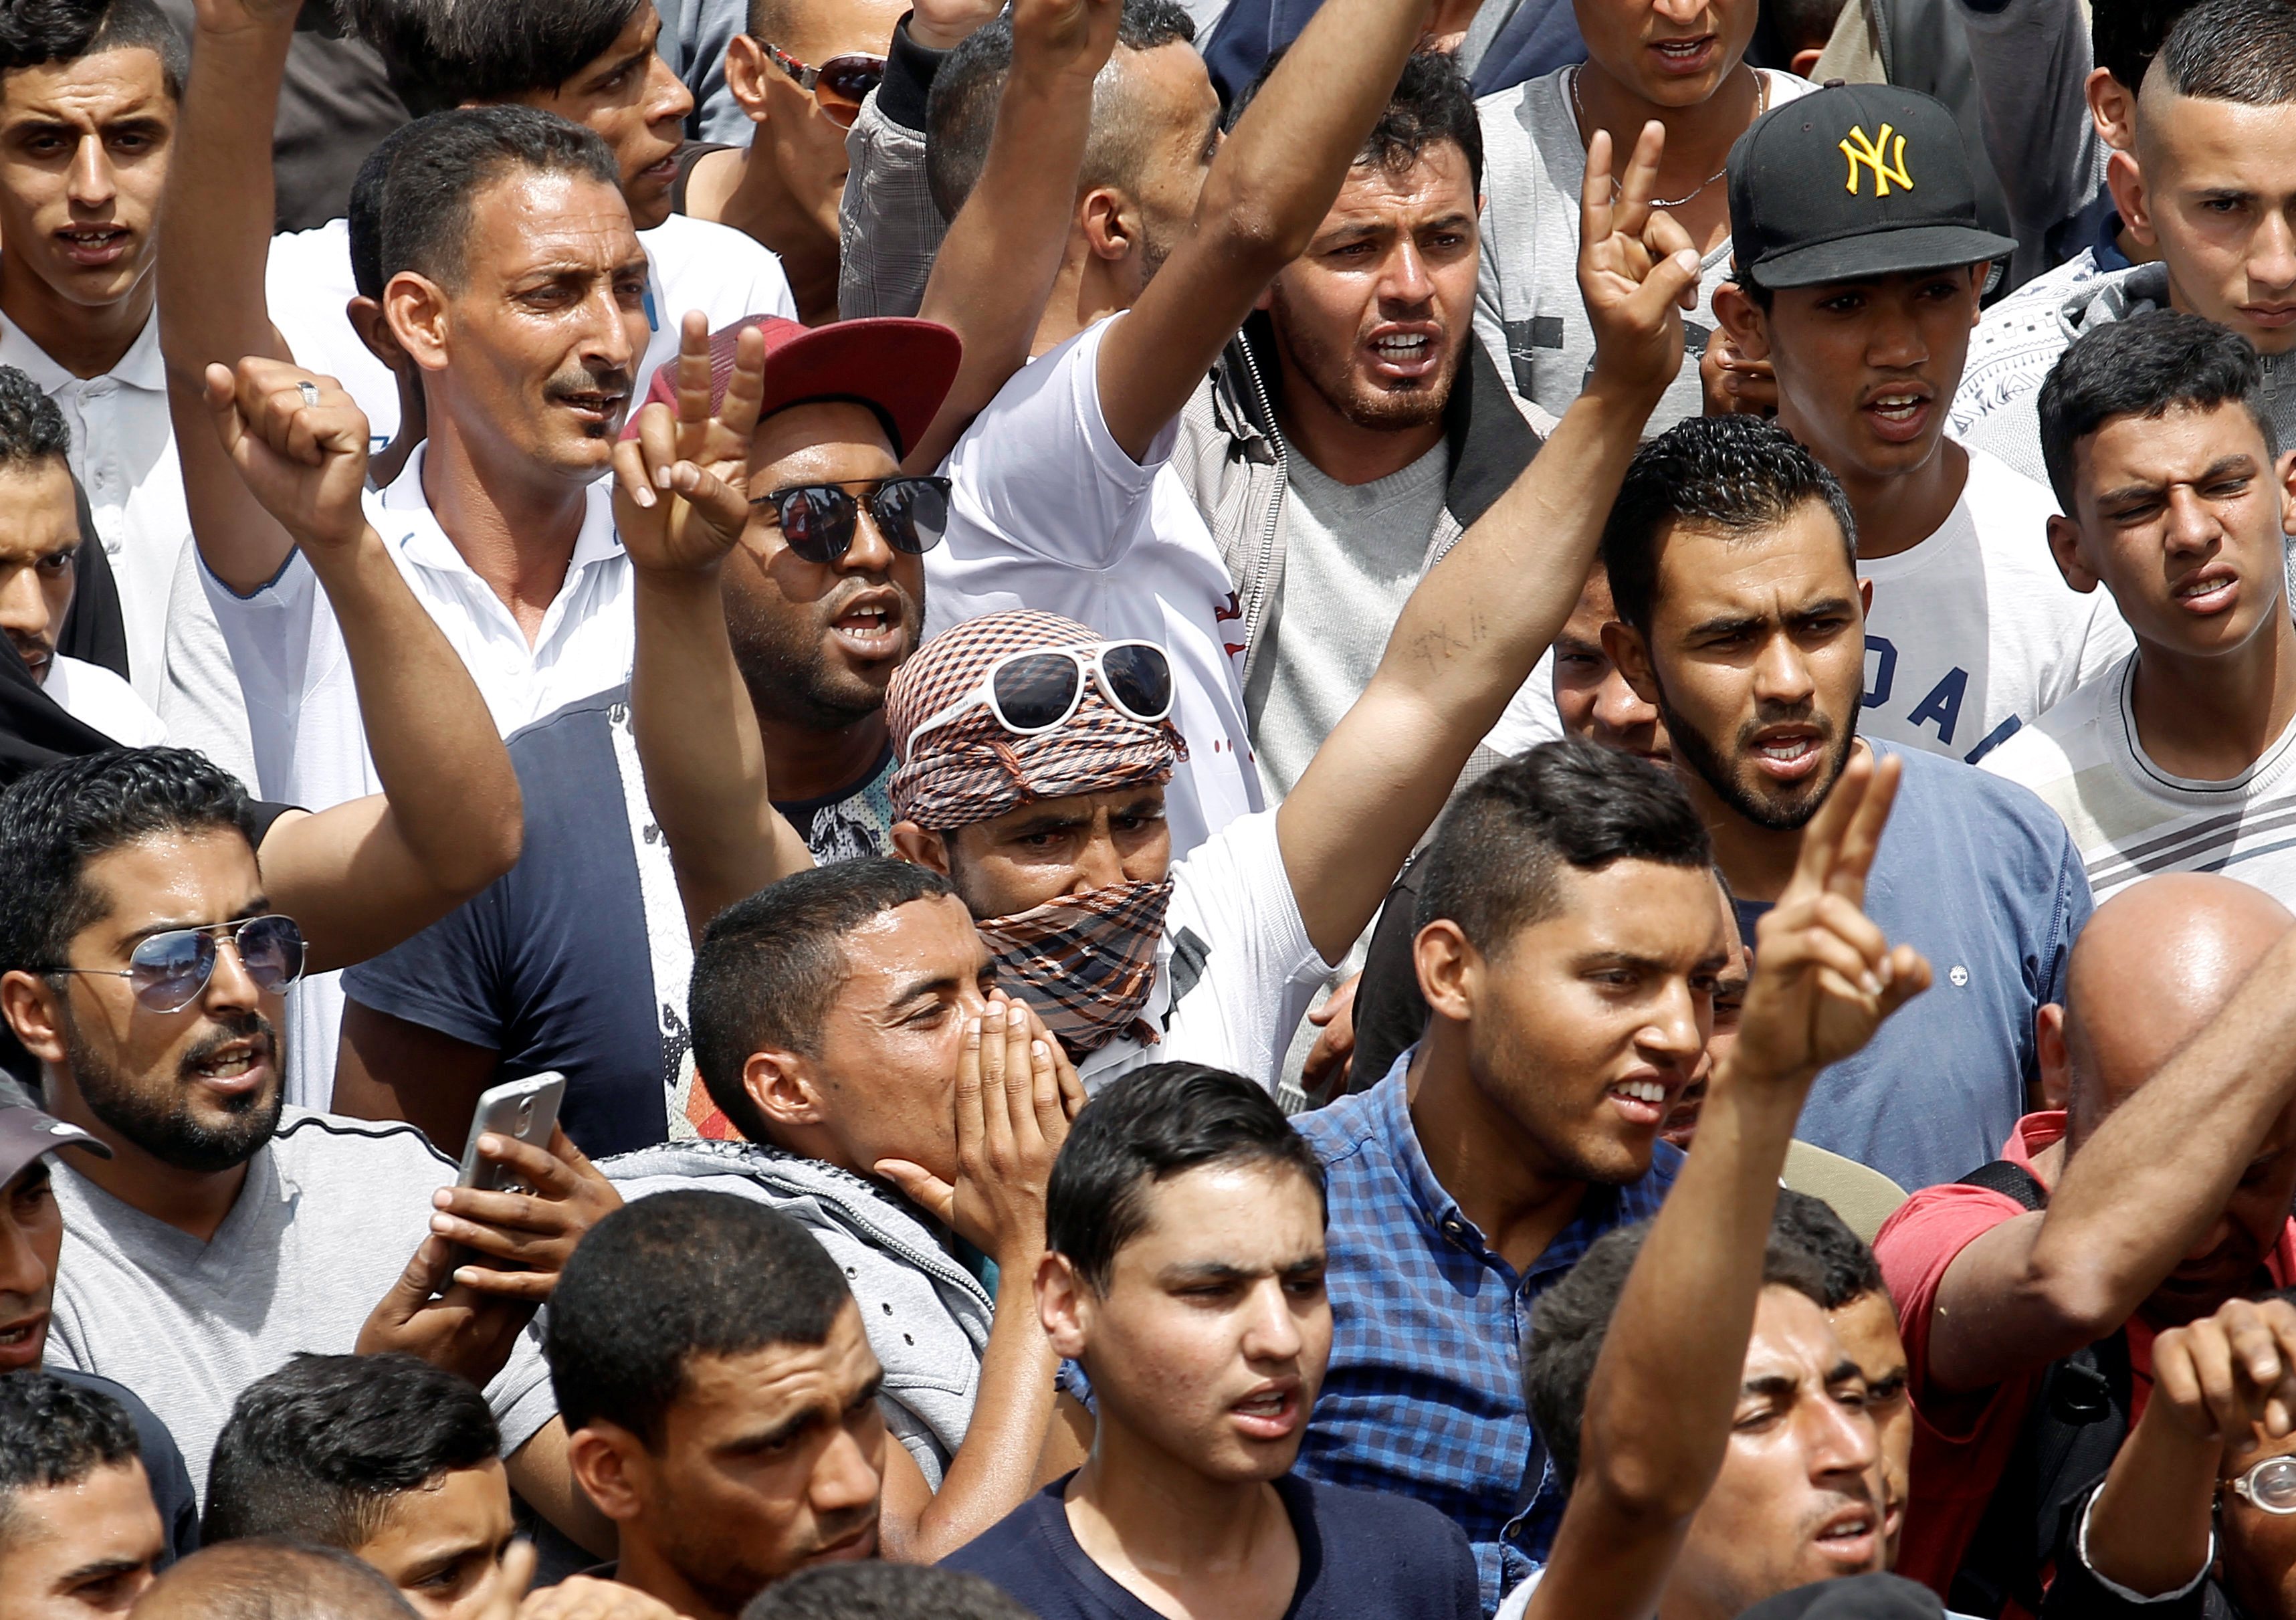 احتجاجات فى تونس بعد مقتل شاب